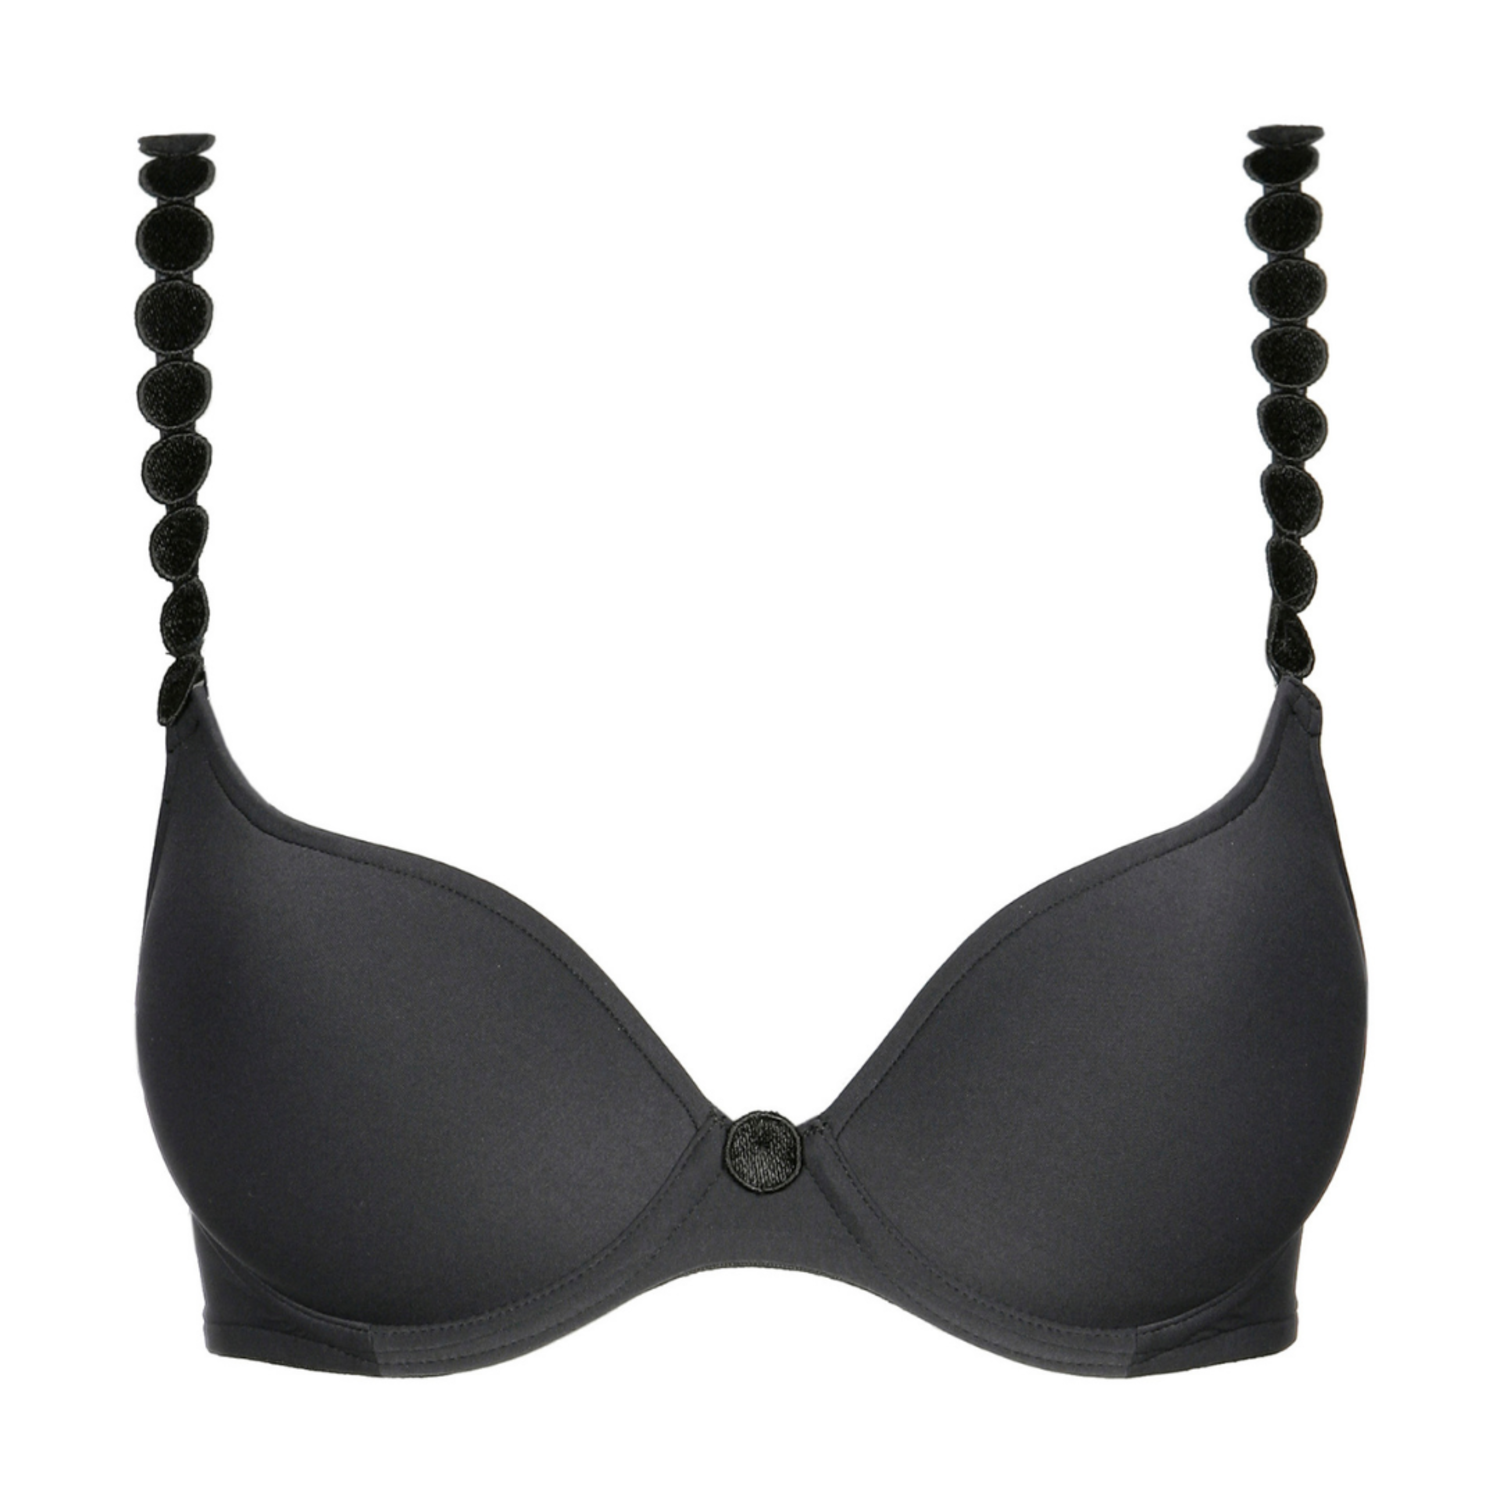 Padded bra round shape - Black Lace - Marie Jo